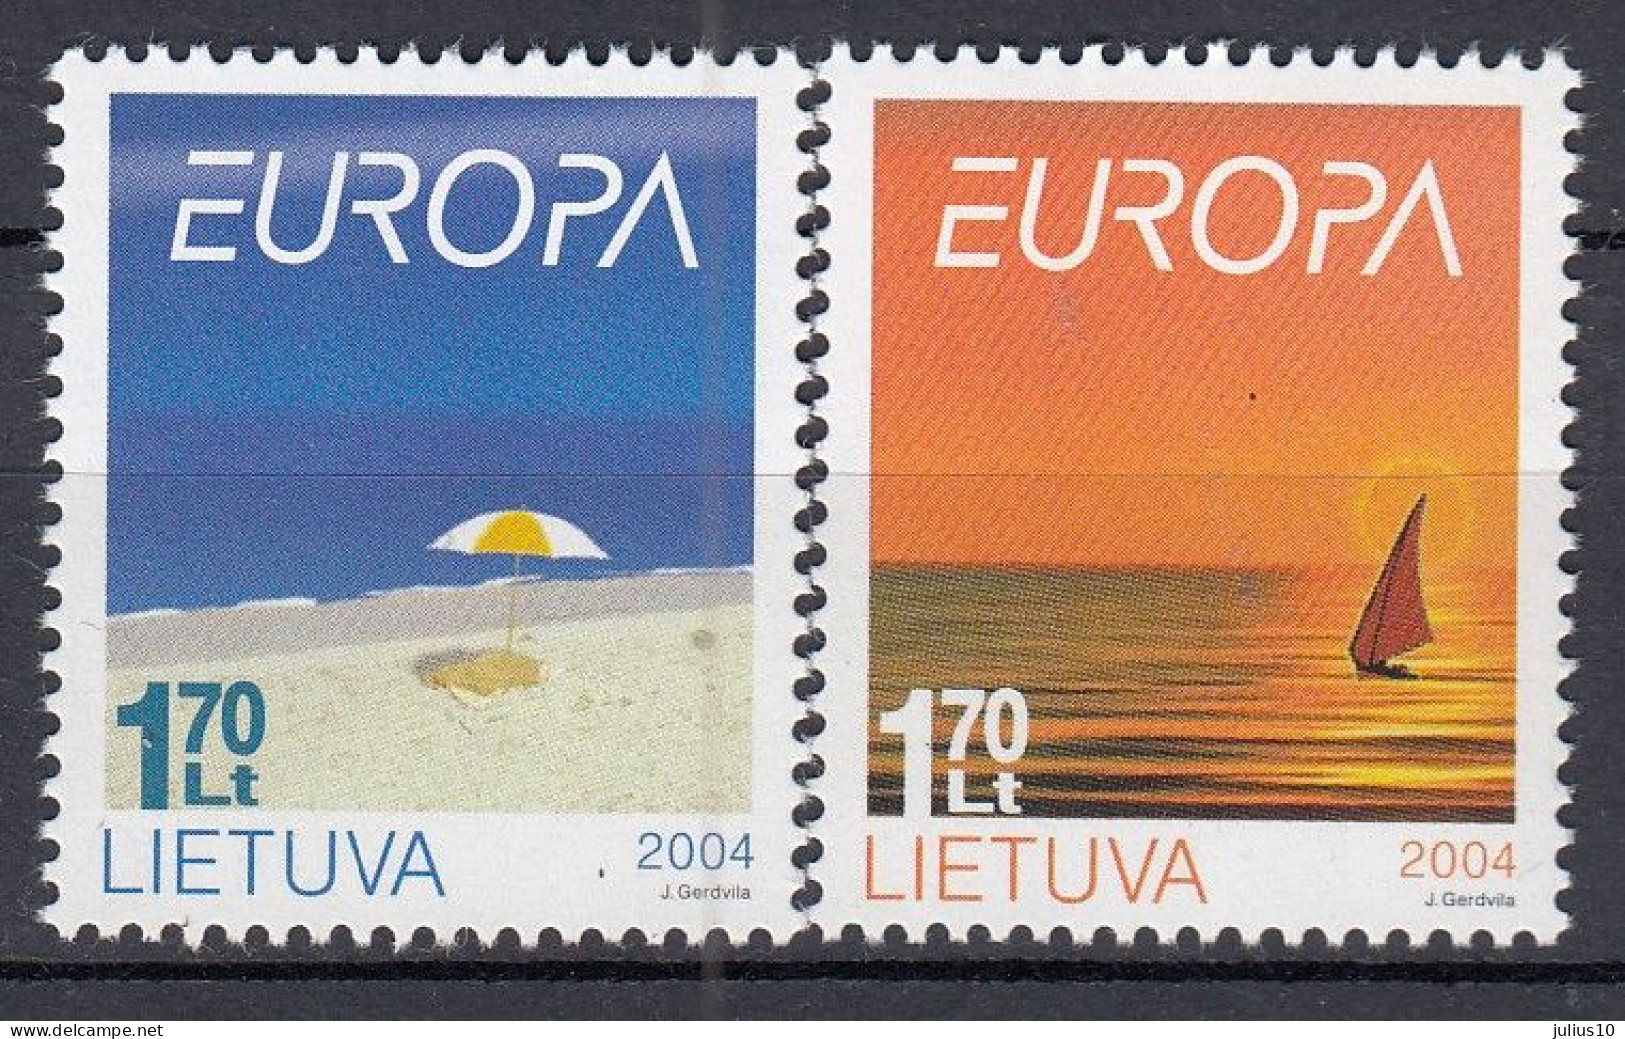 LITHUANIA 2004 Europa Holiday MNH(**) Mi 842-843 #Lt1004 - Litauen